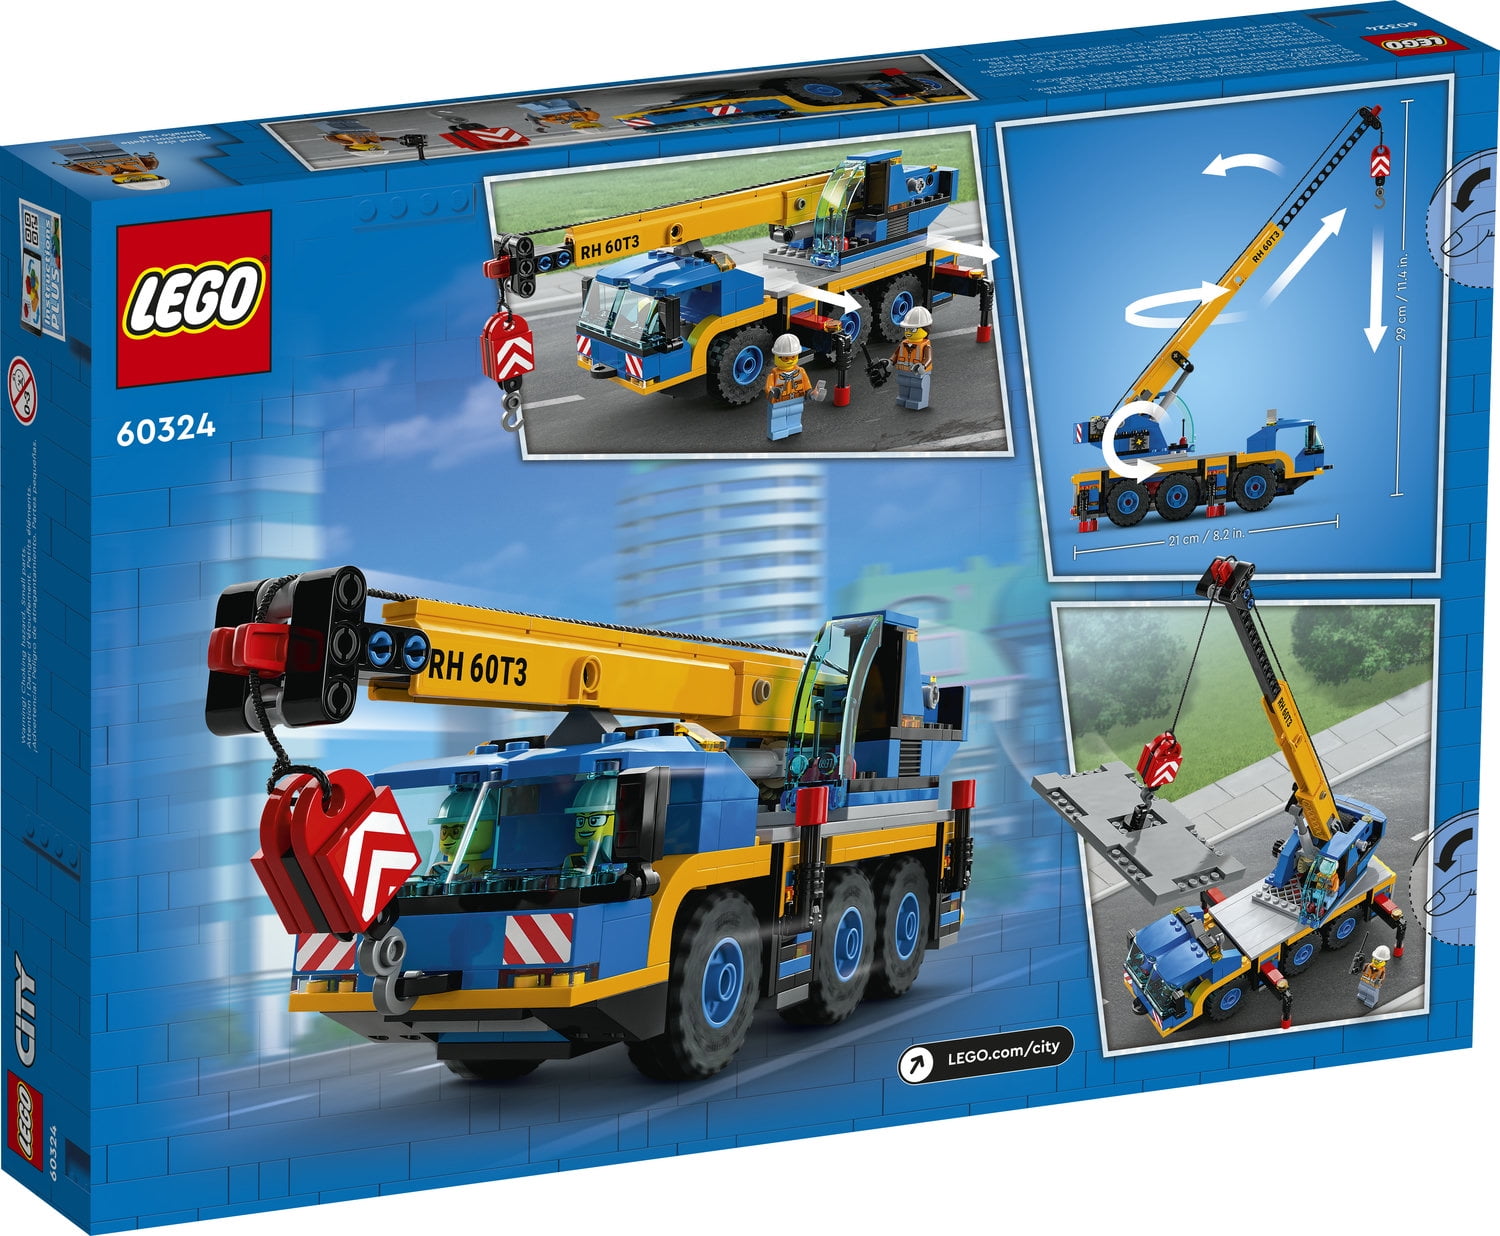 LEGO City Great Vehicles Mobile Crane Truck Toy Building Set 60324